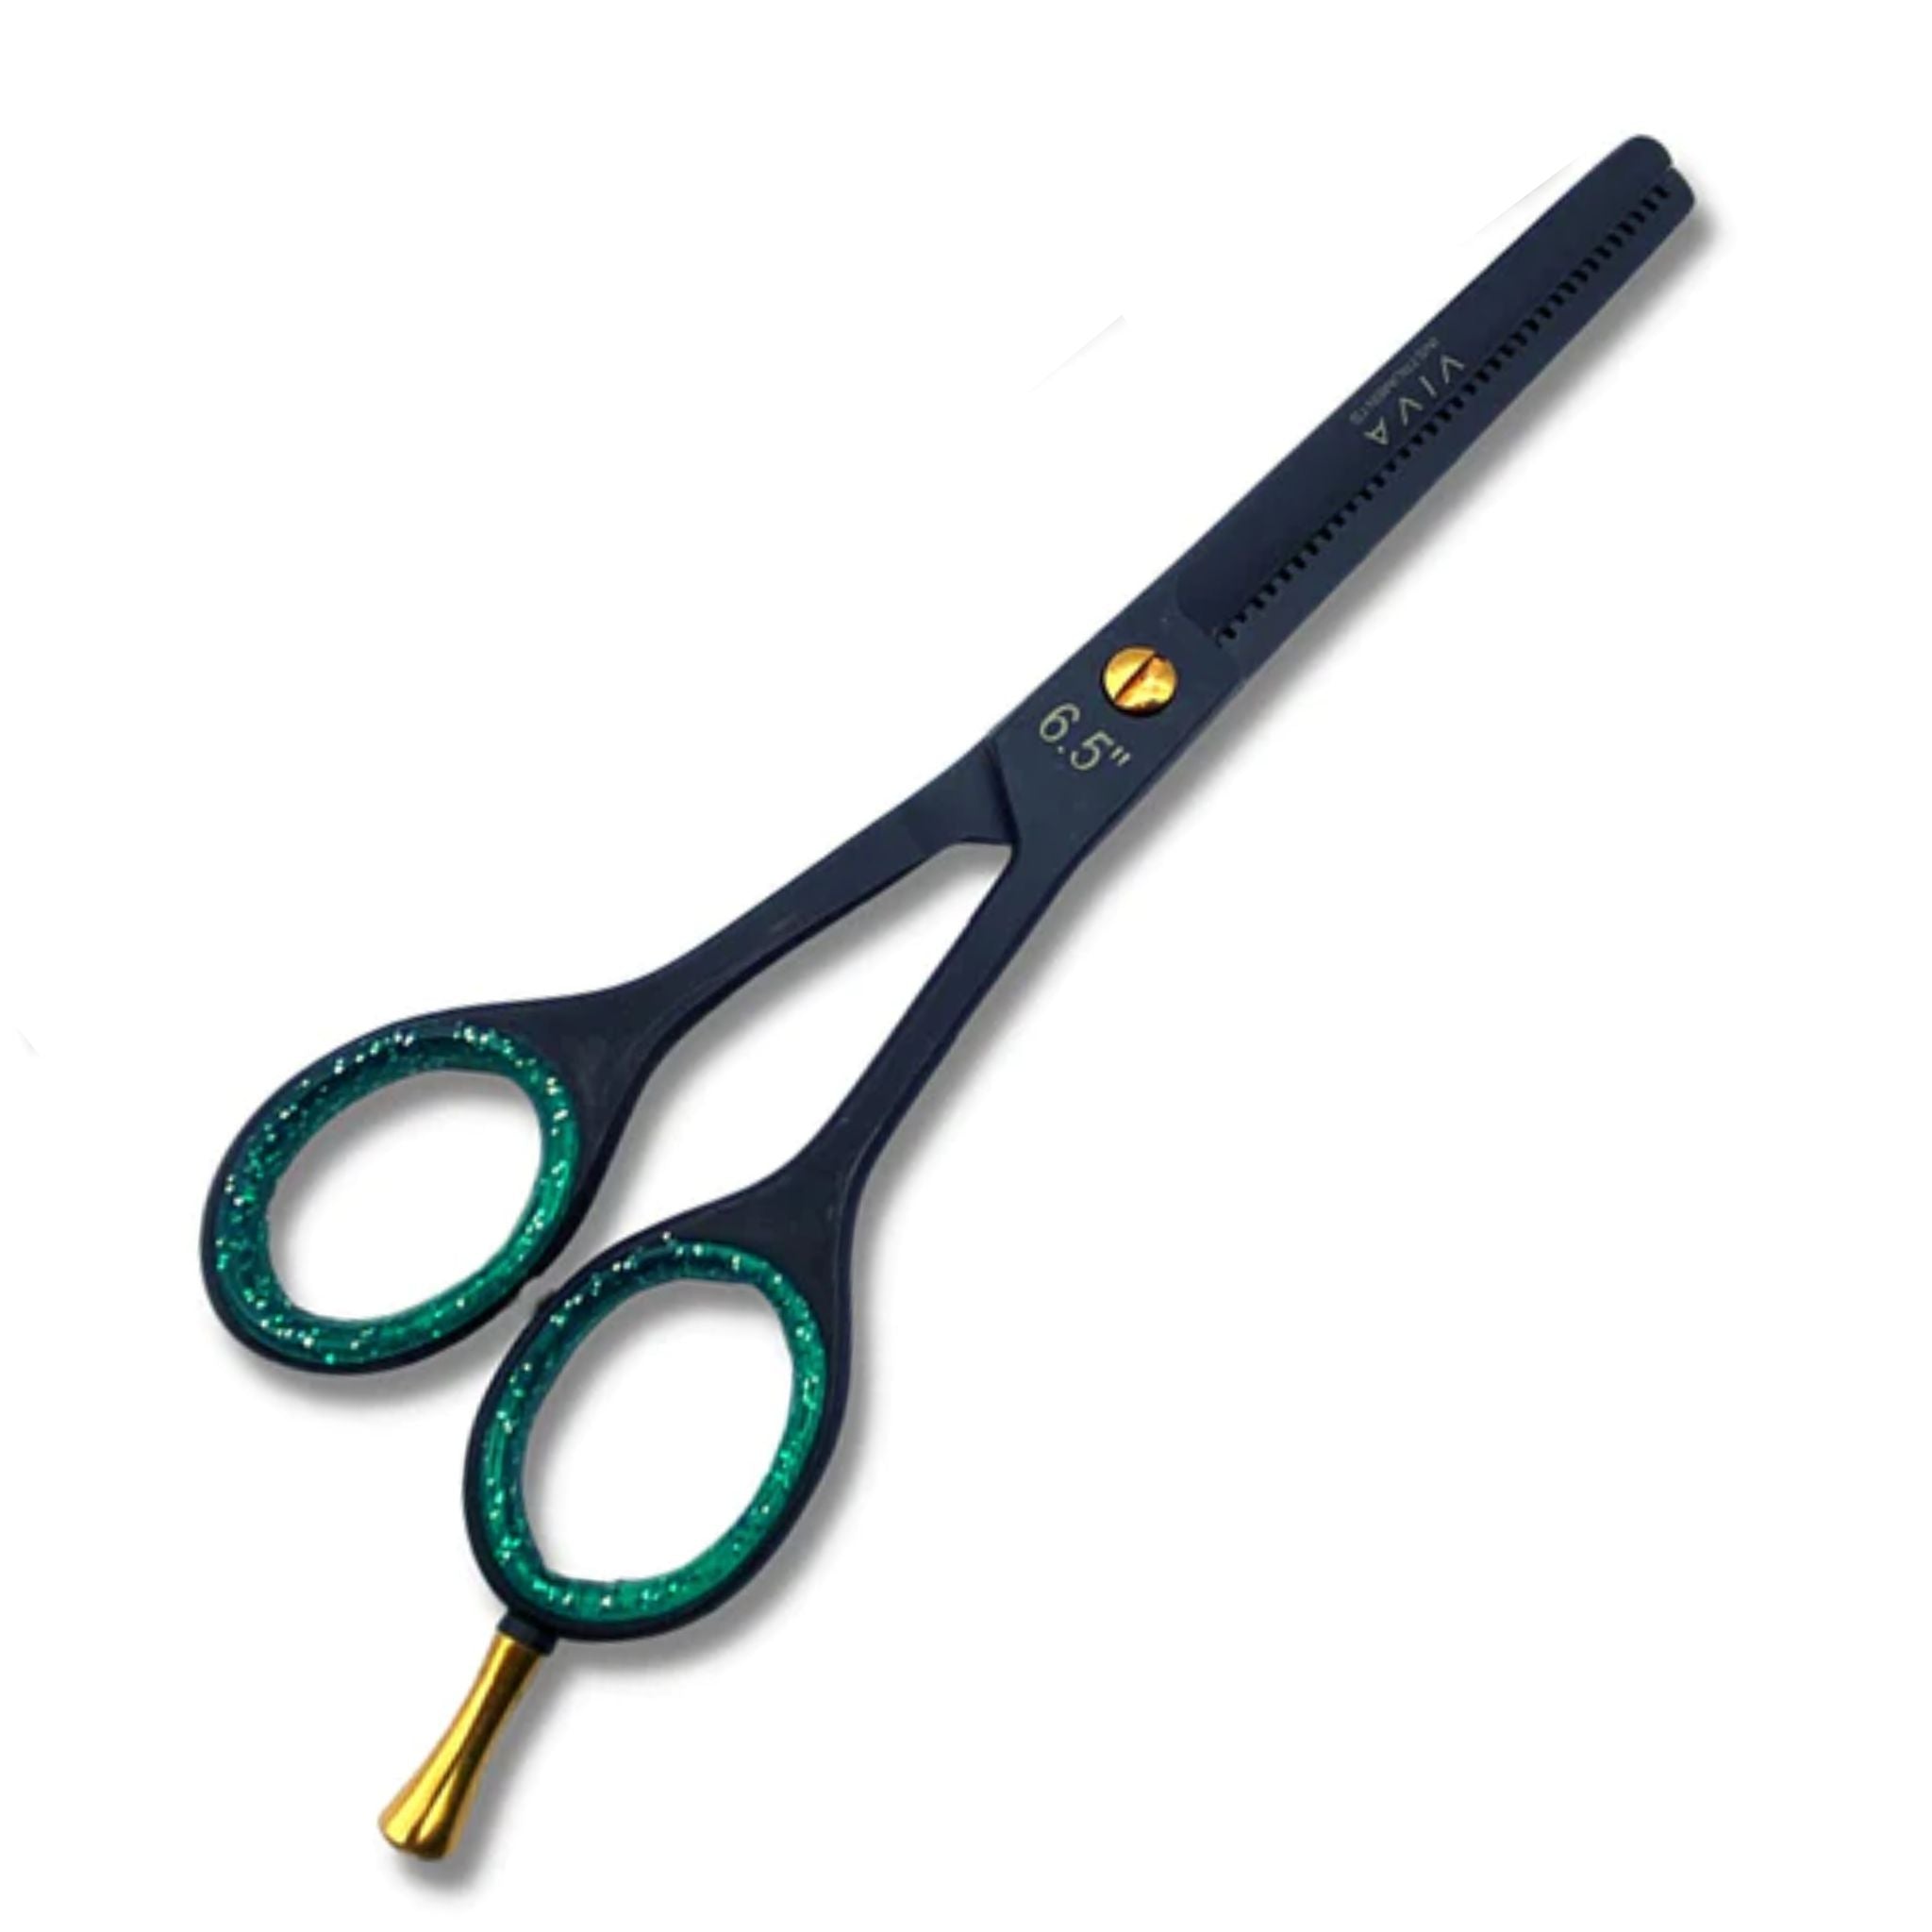 hair thinning scissors - viva instruments 